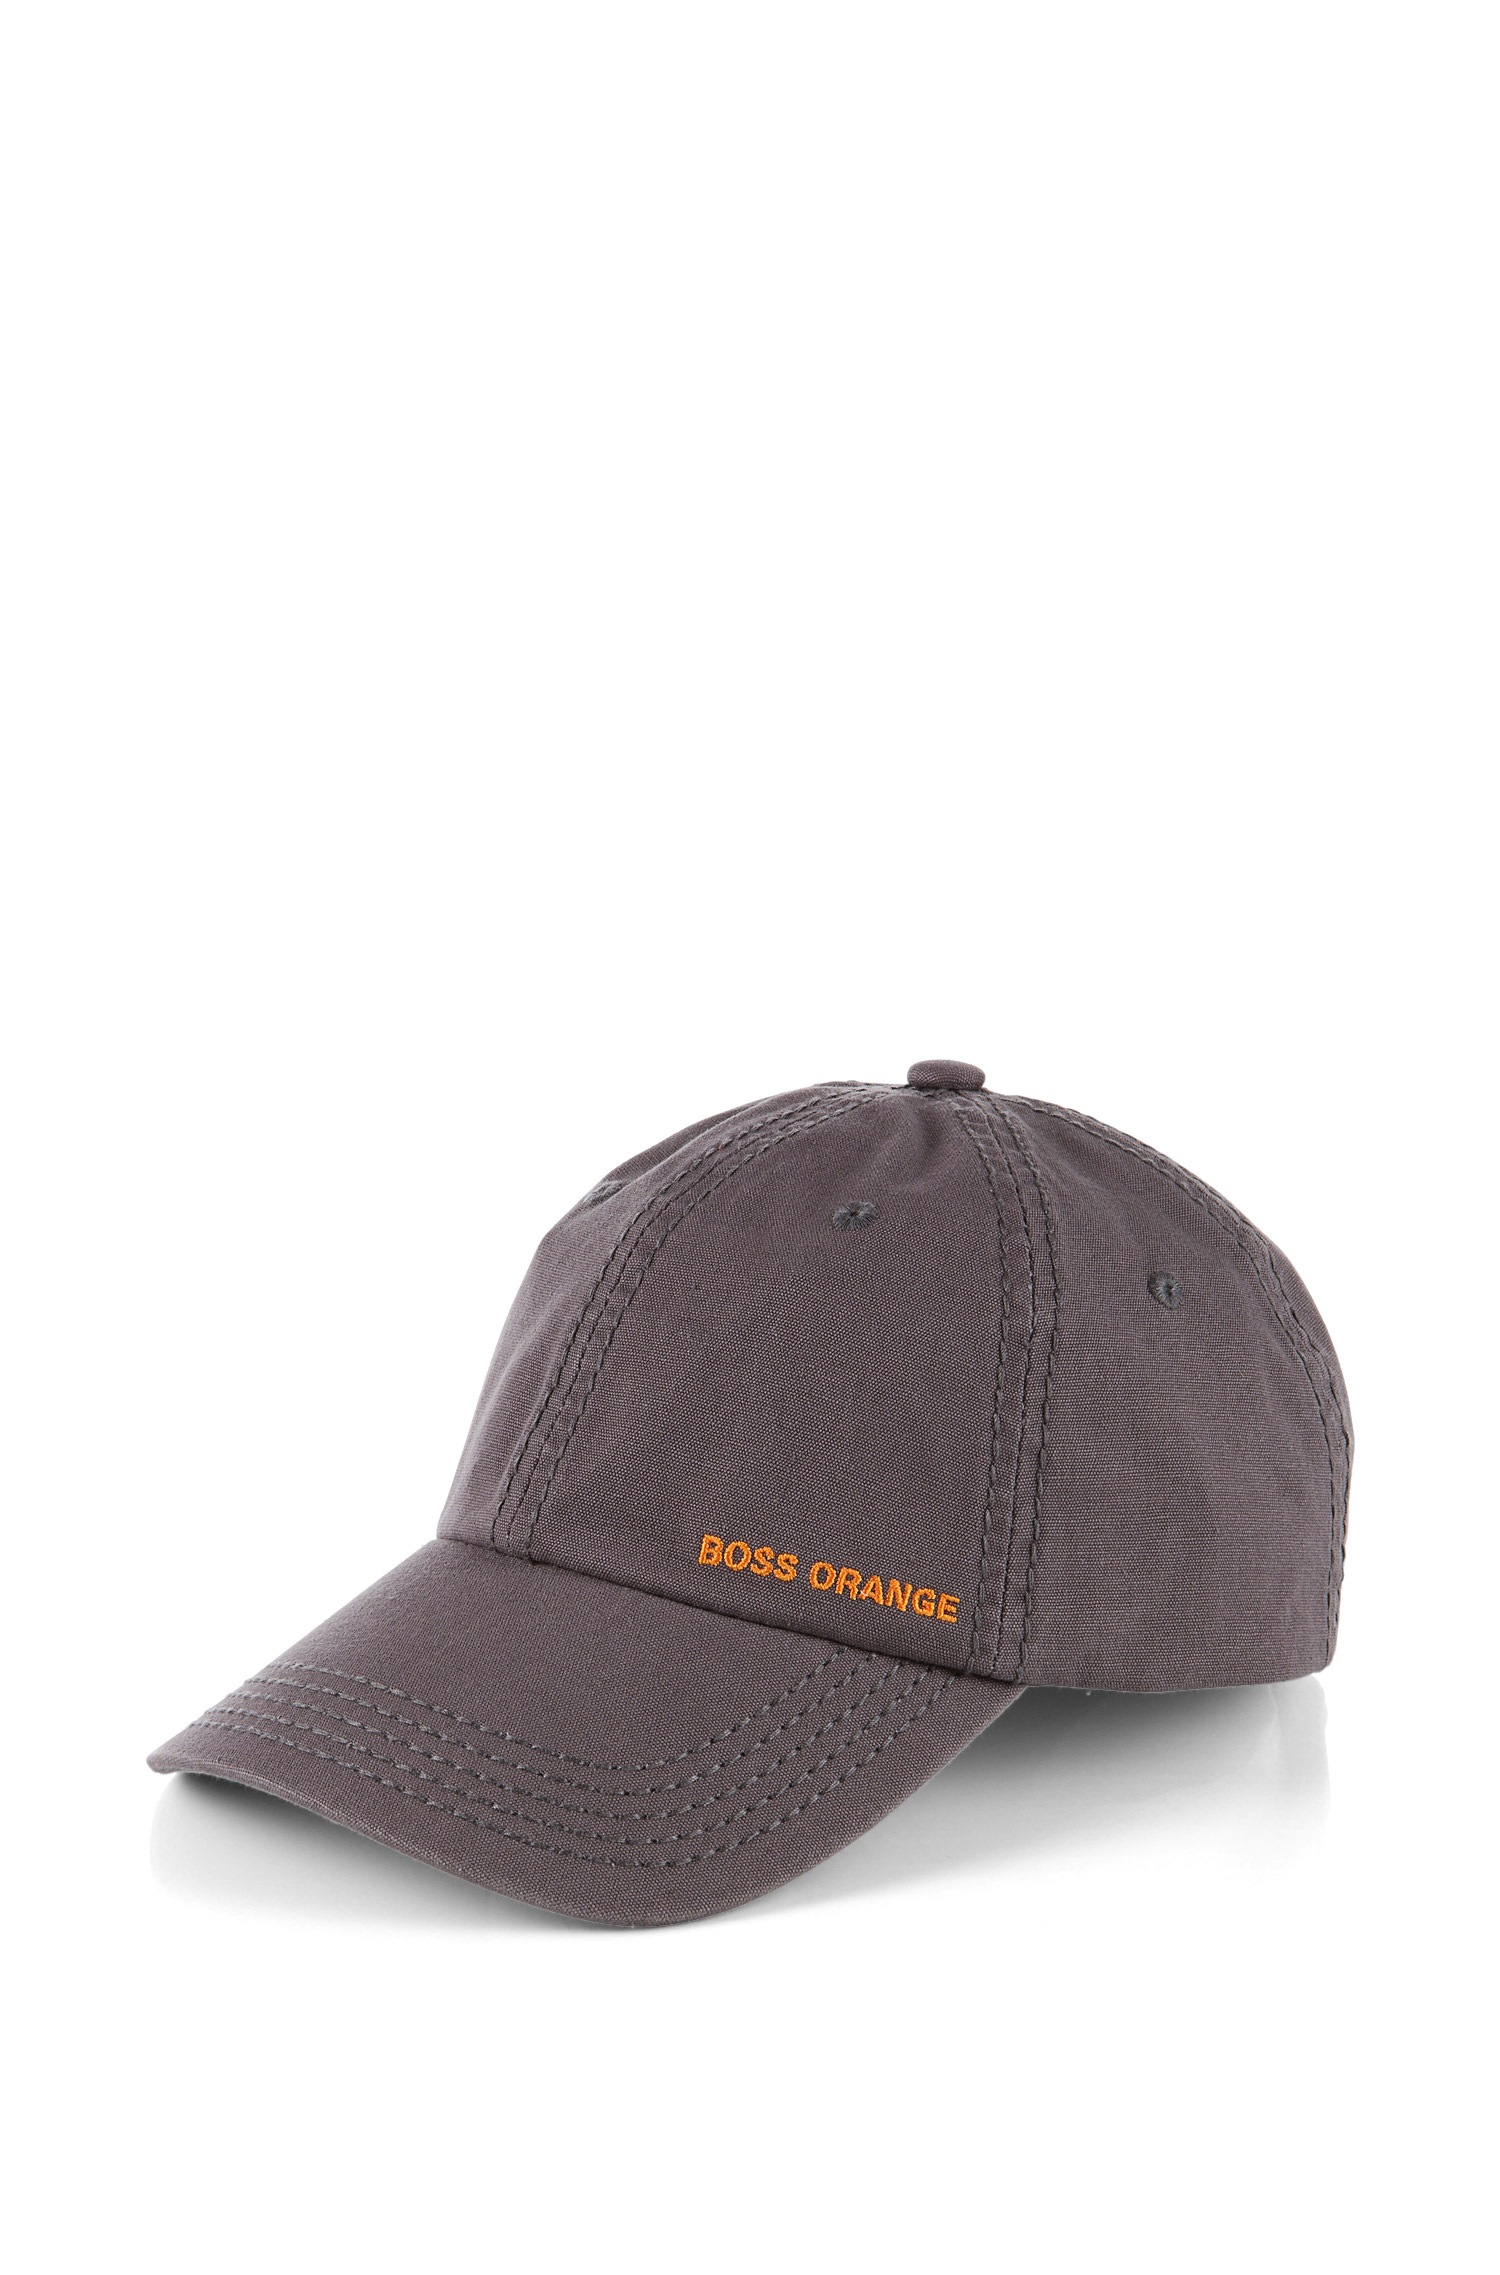 BOSS Orange Cotton Cap 'Forcano-10' in Dark Grey (Grey) for Men - Lyst